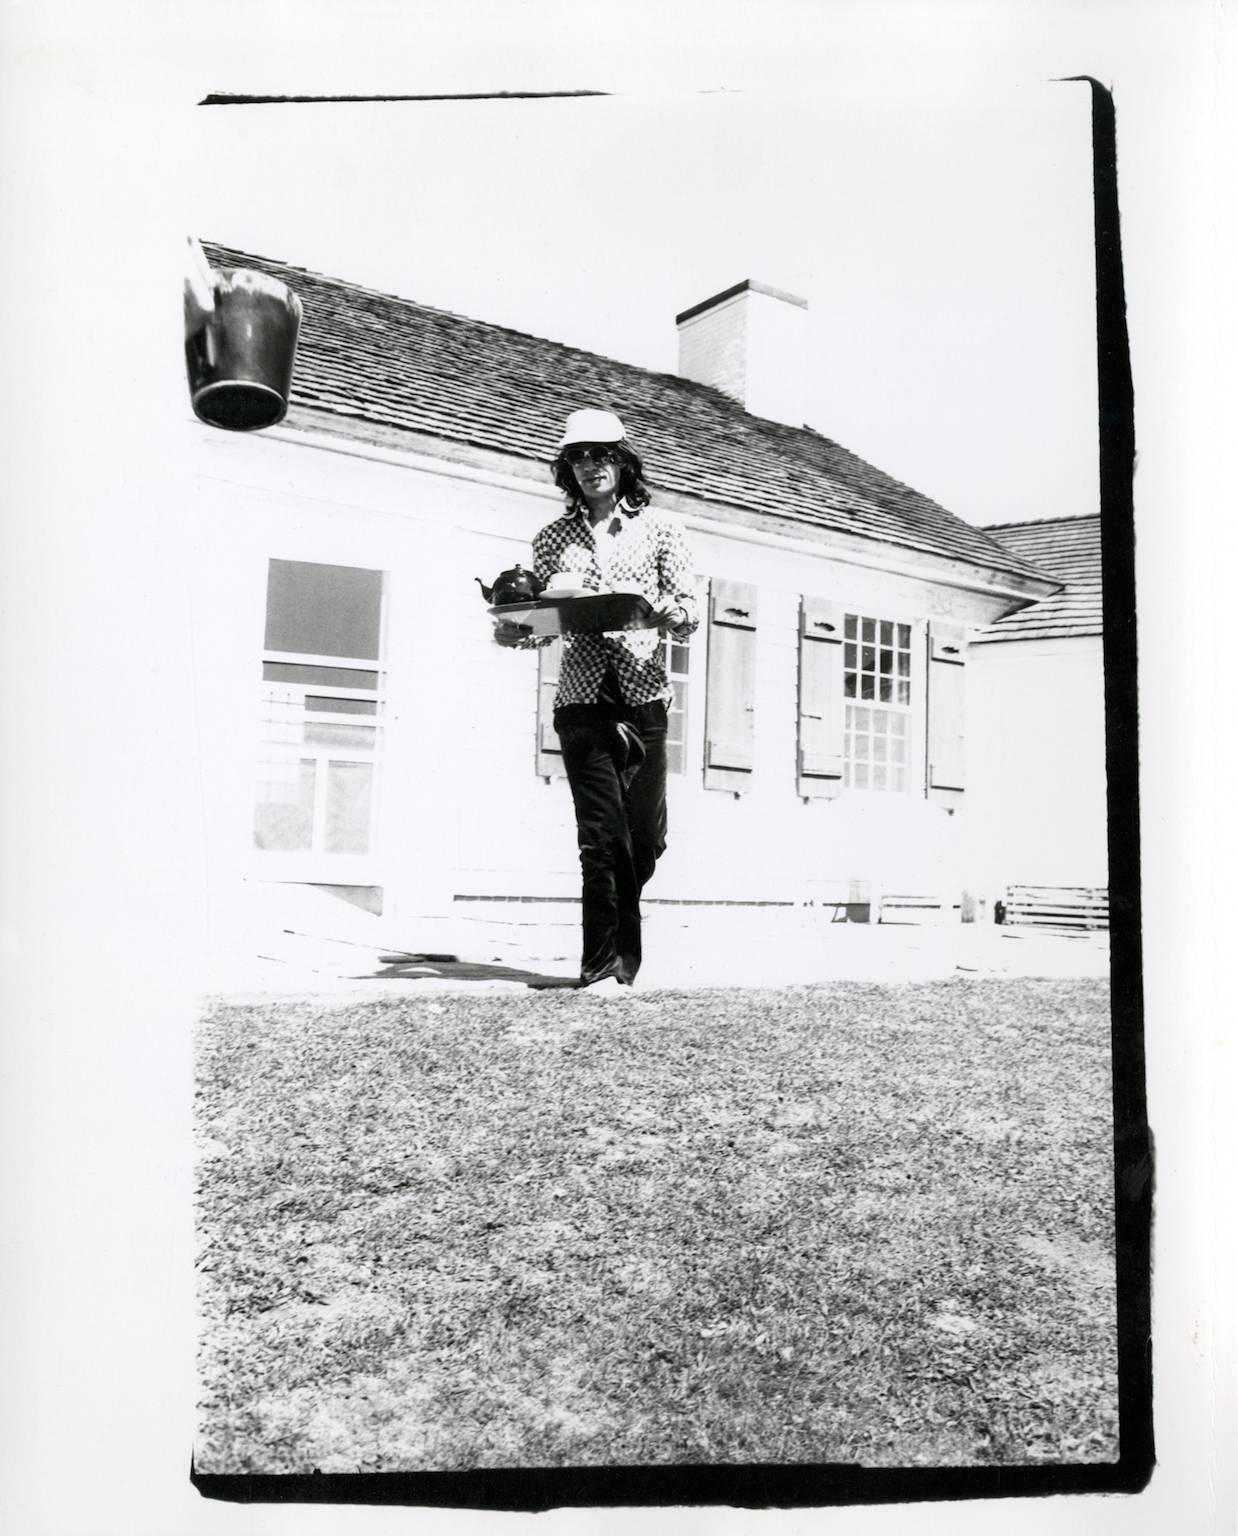 Andy Warhol Portrait Photograph - Mick Jagger (serving tea in Montauk)